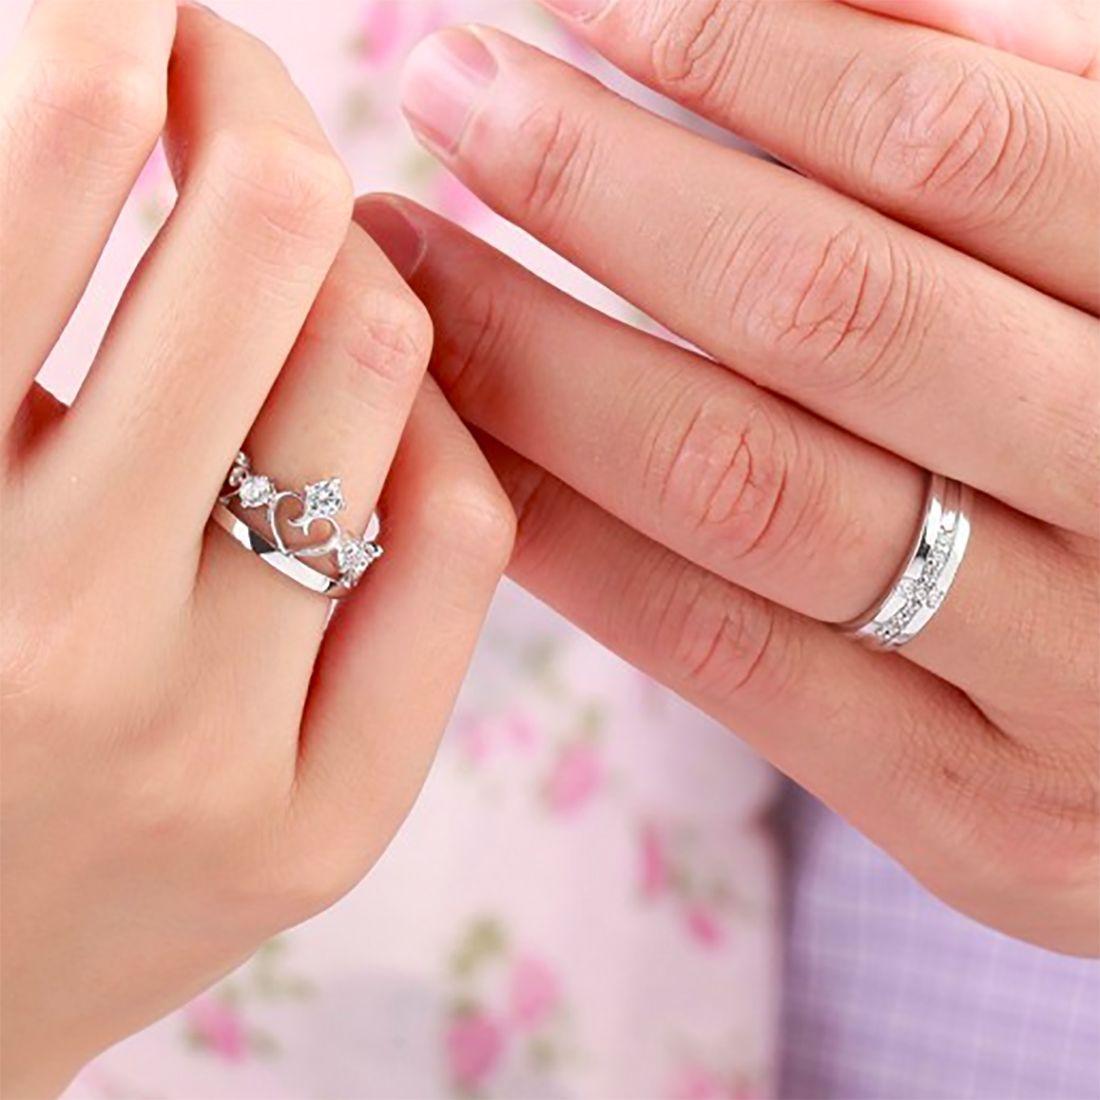 The Beauty of Diamond Wedding Rings for Women